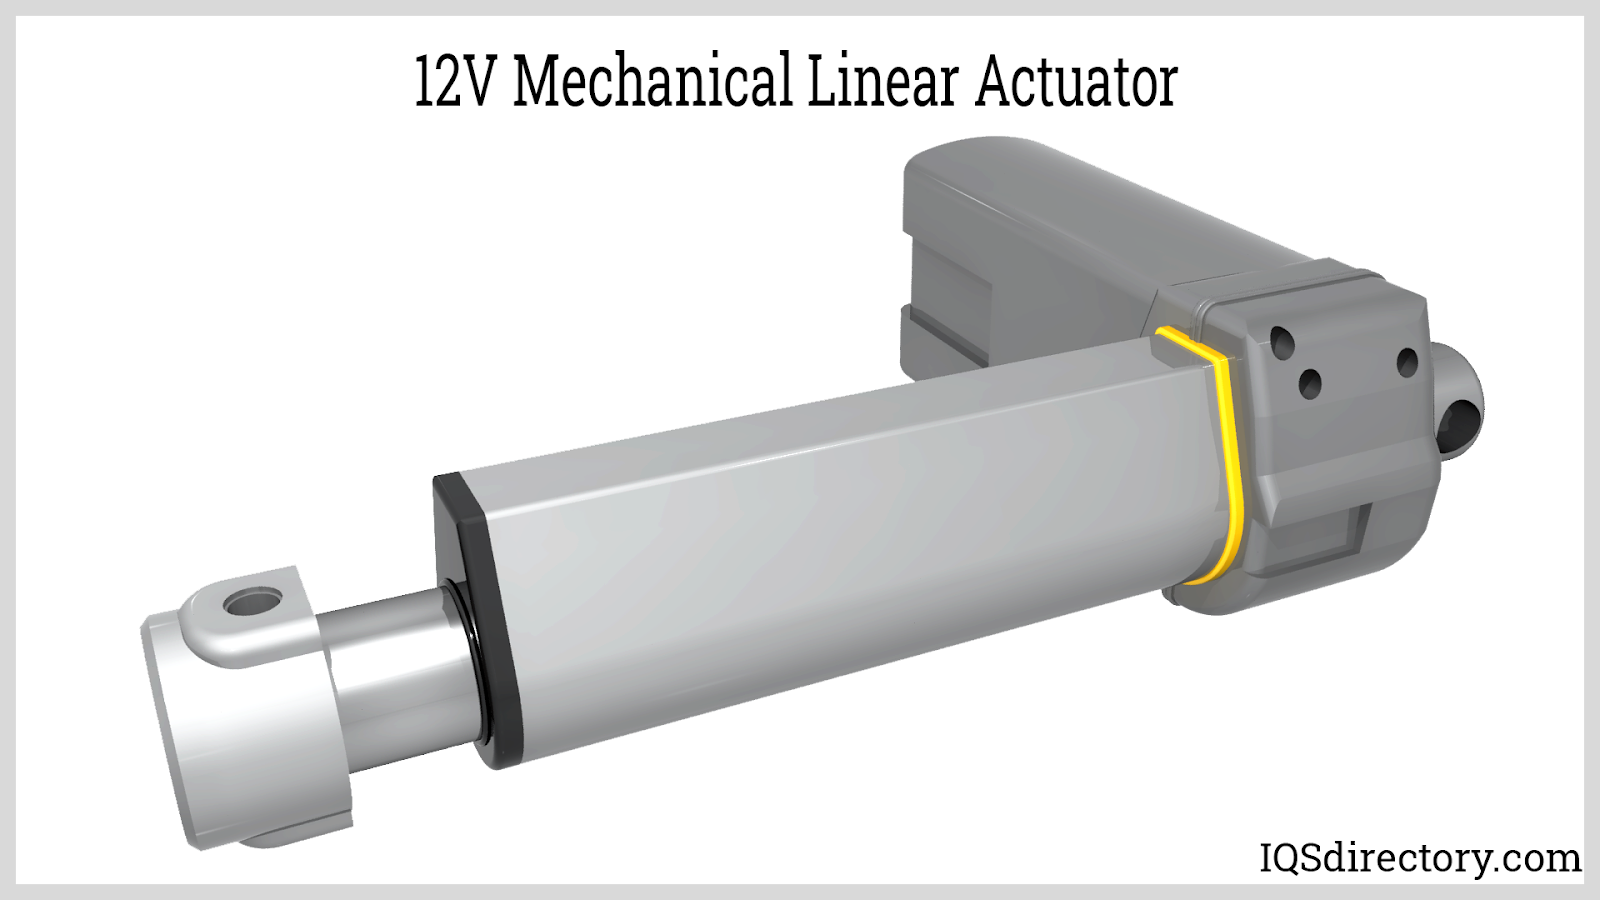 12V Mechanical Linear Actuator